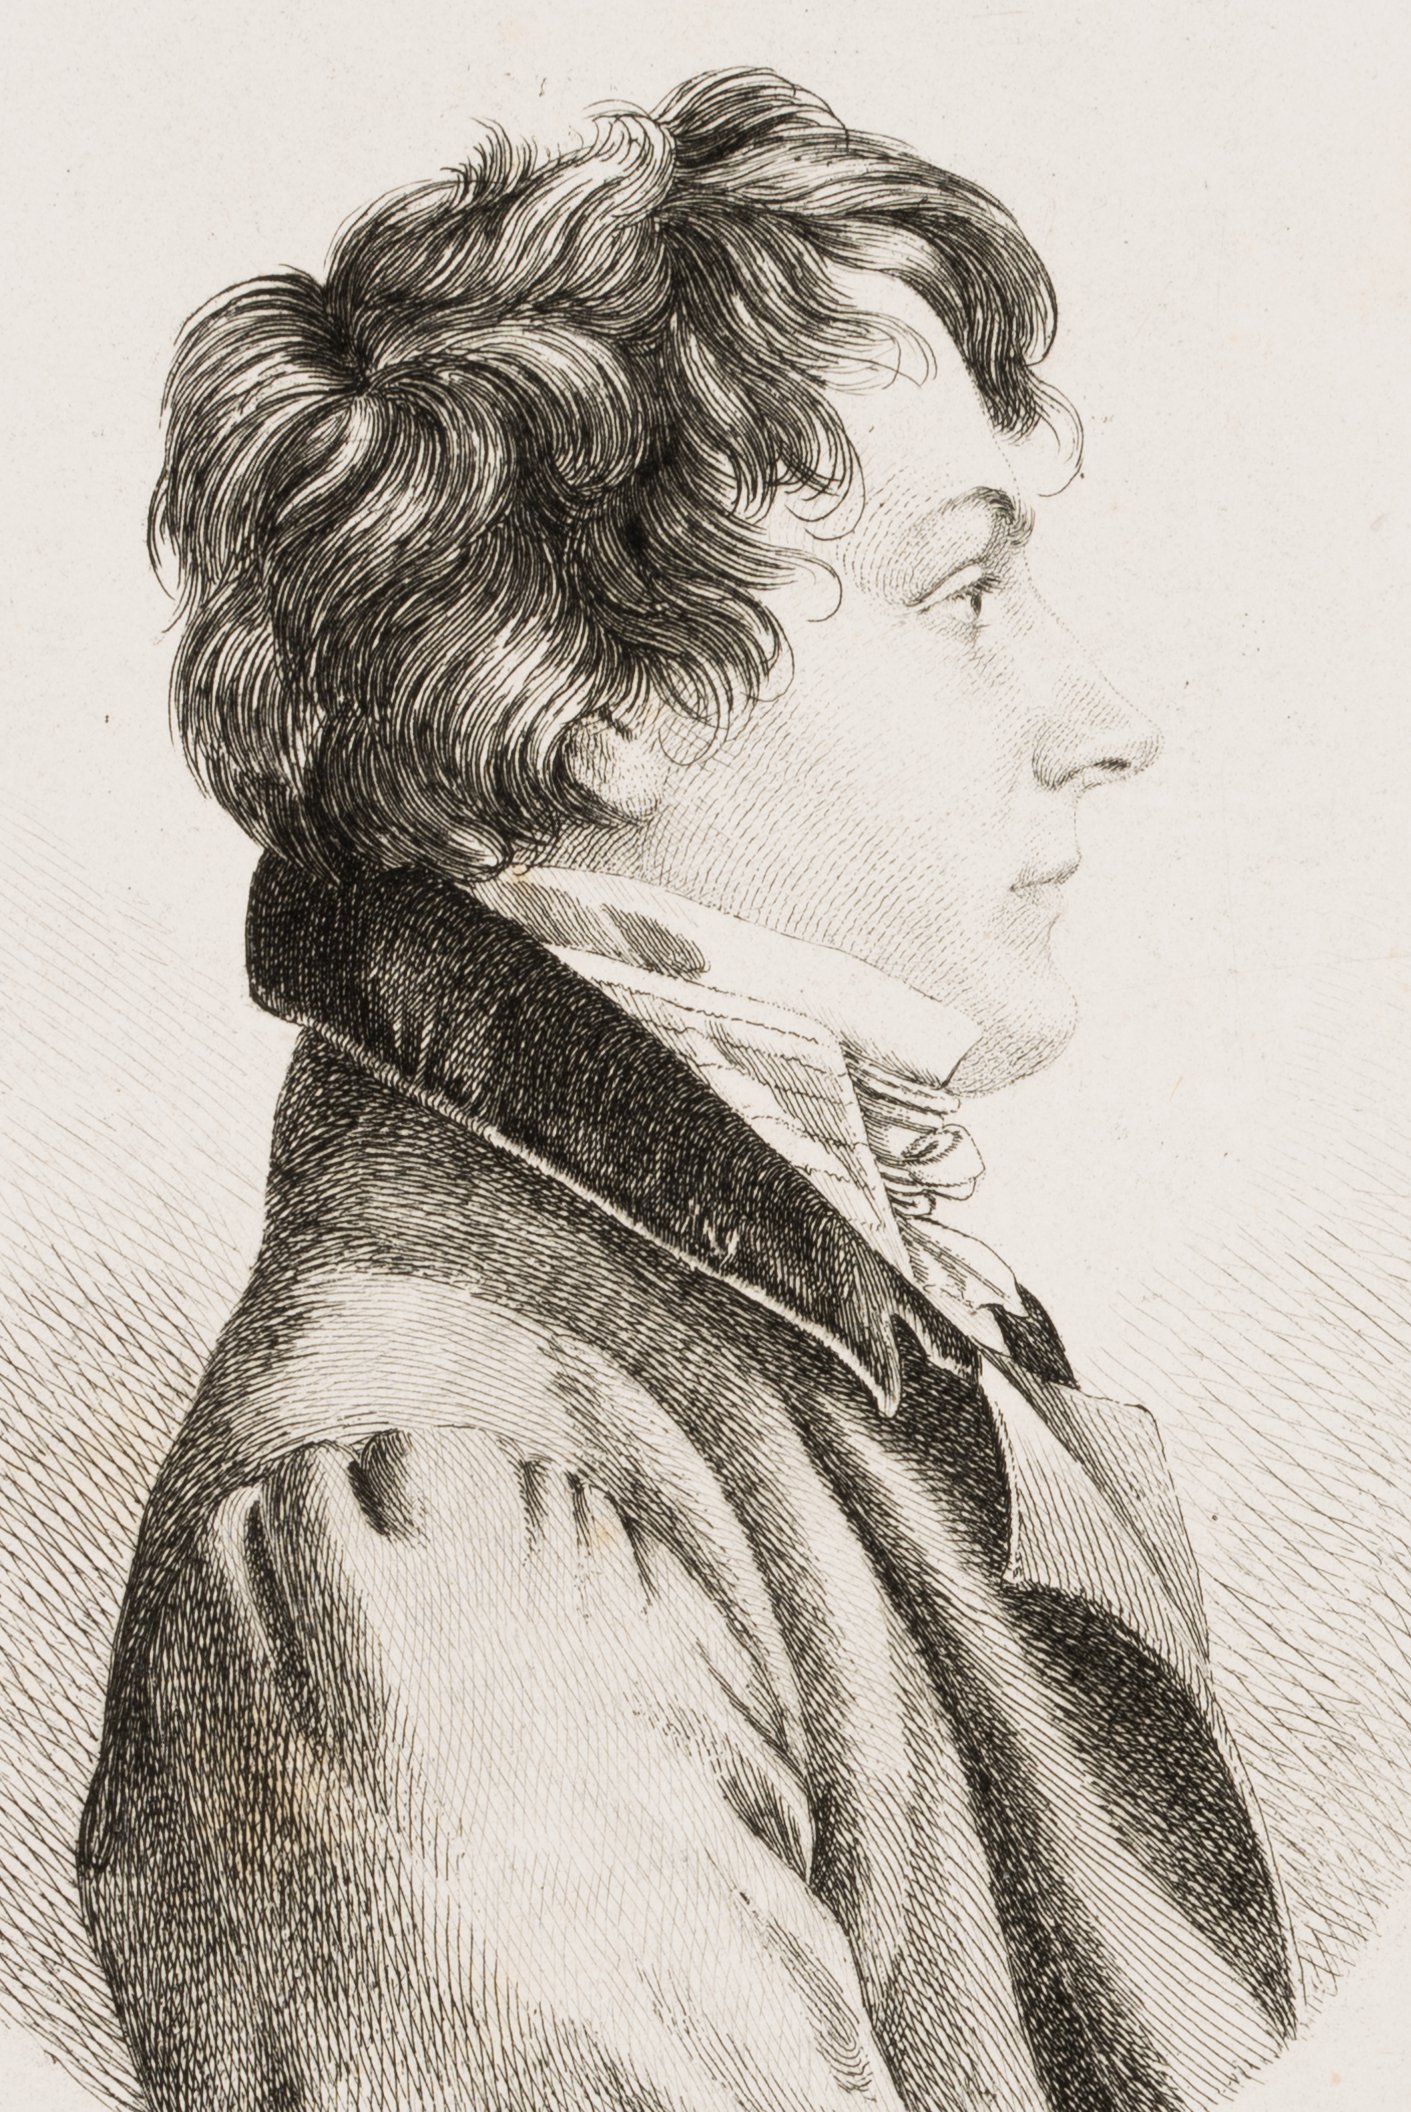 Johann Christoph Erhard